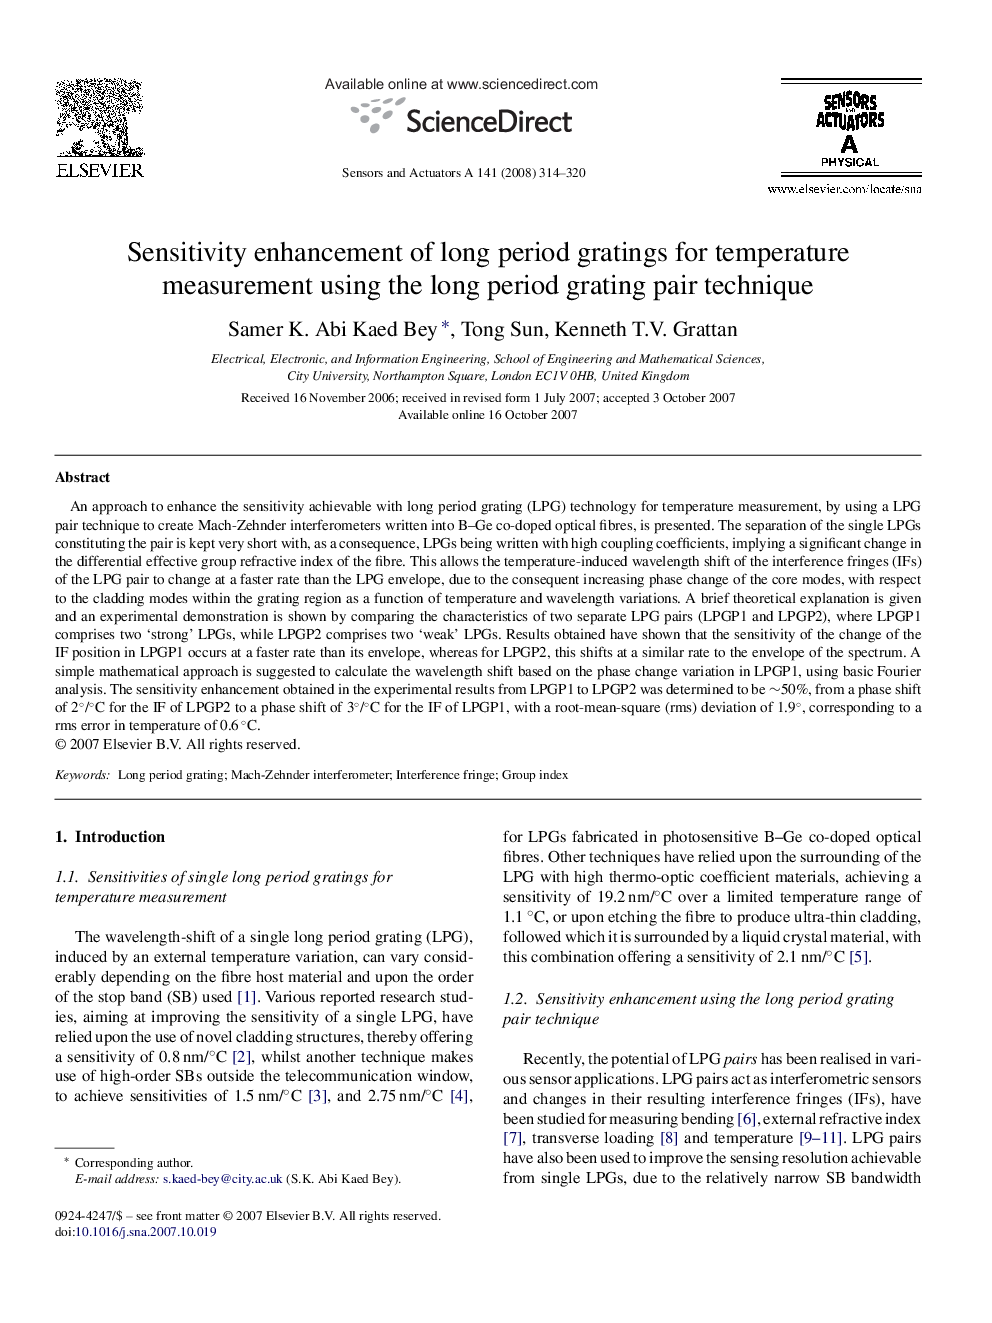 Sensitivity enhancement of long period gratings for temperature measurement using the long period grating pair technique